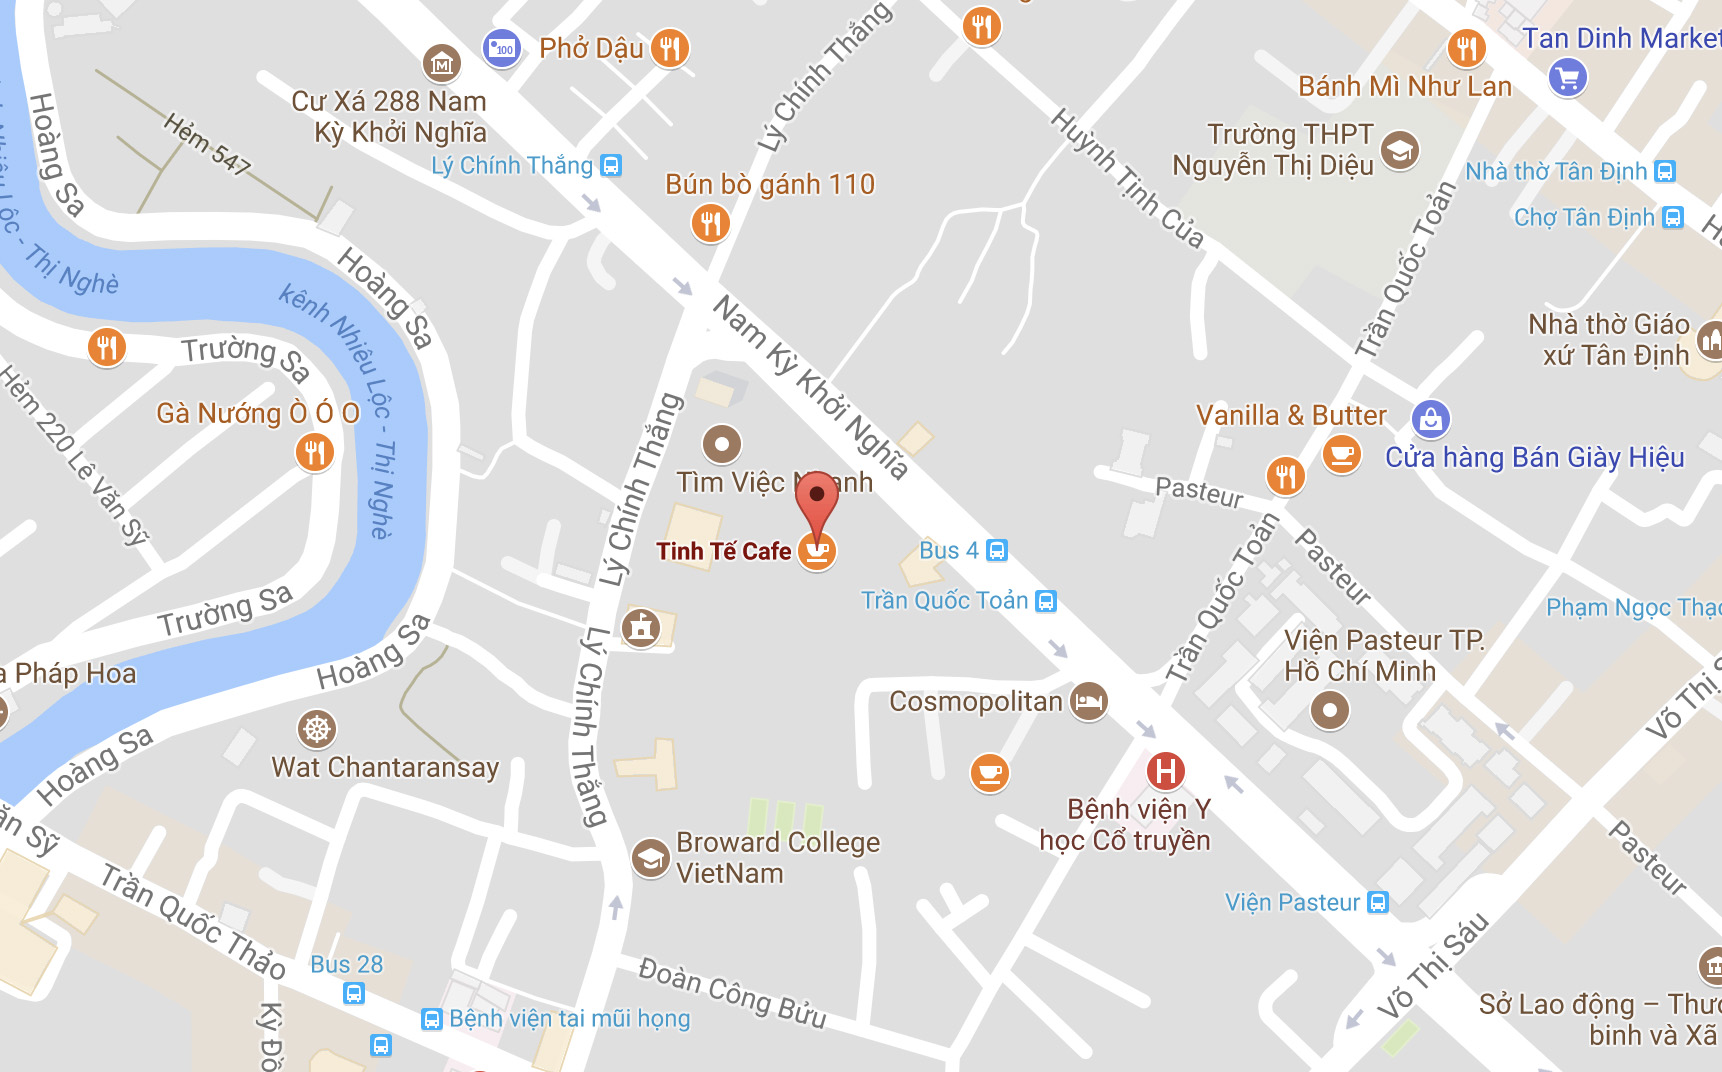 Cafe Tinh Te map.jpg